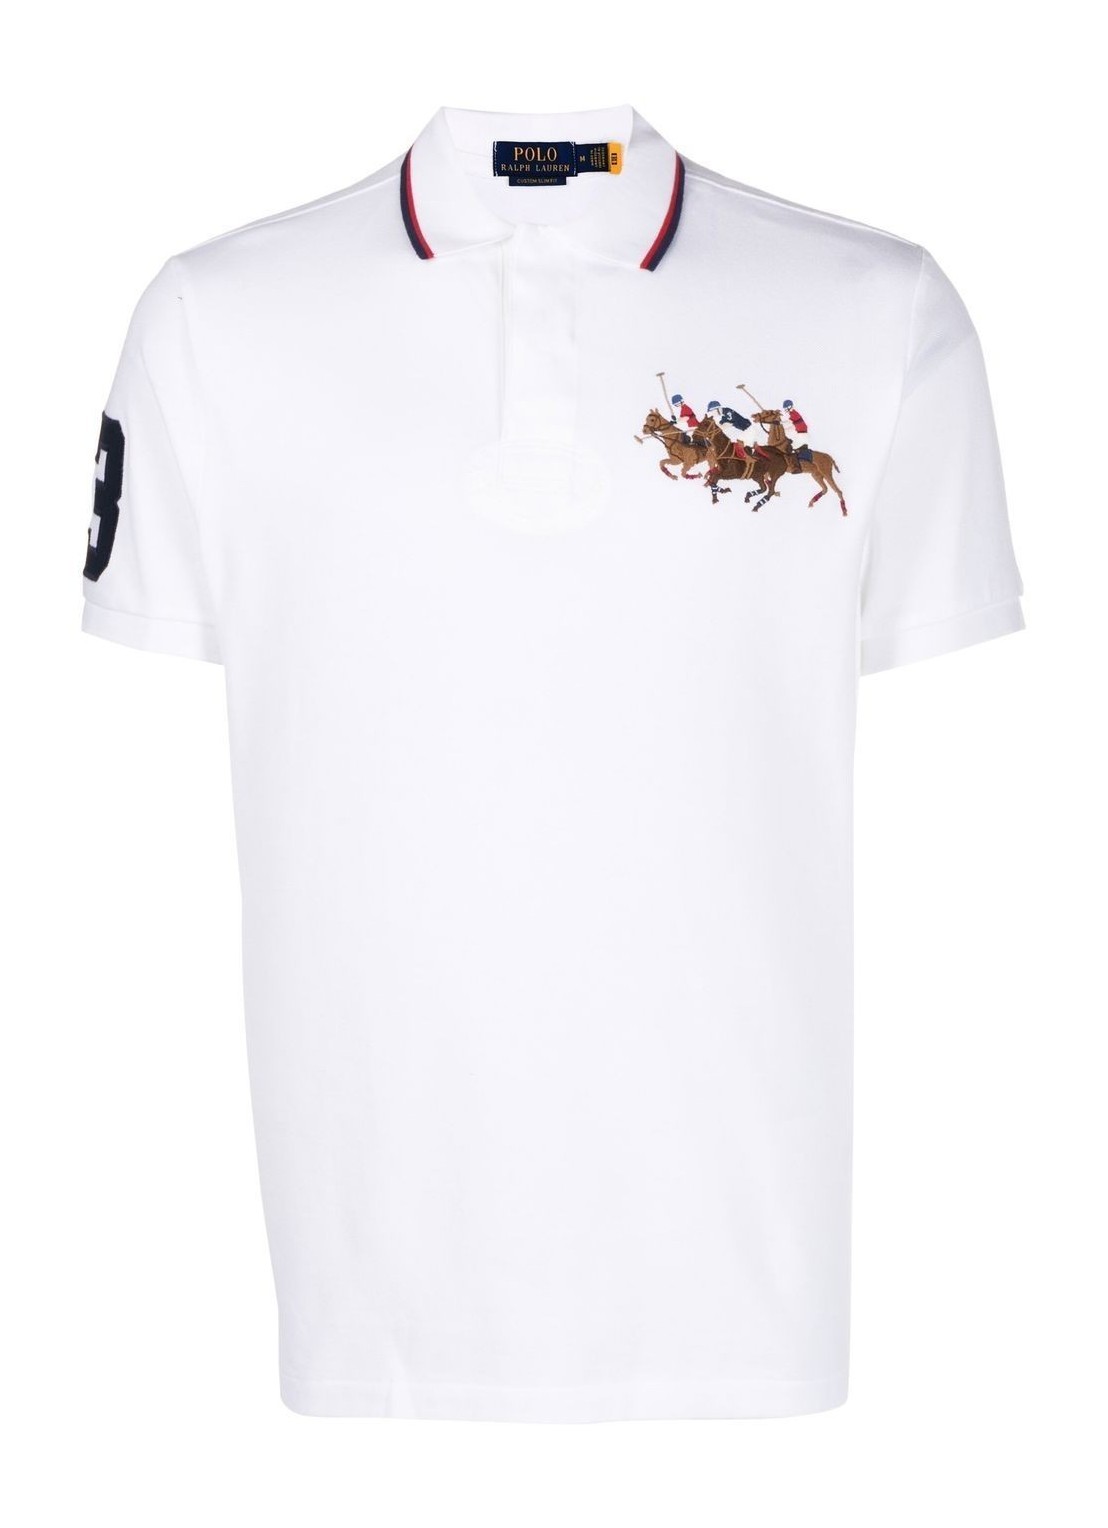 Polo polo ralph lauren polo man sskccmslm11-short sleeve-polo shirt 710900614001 white talla L
 